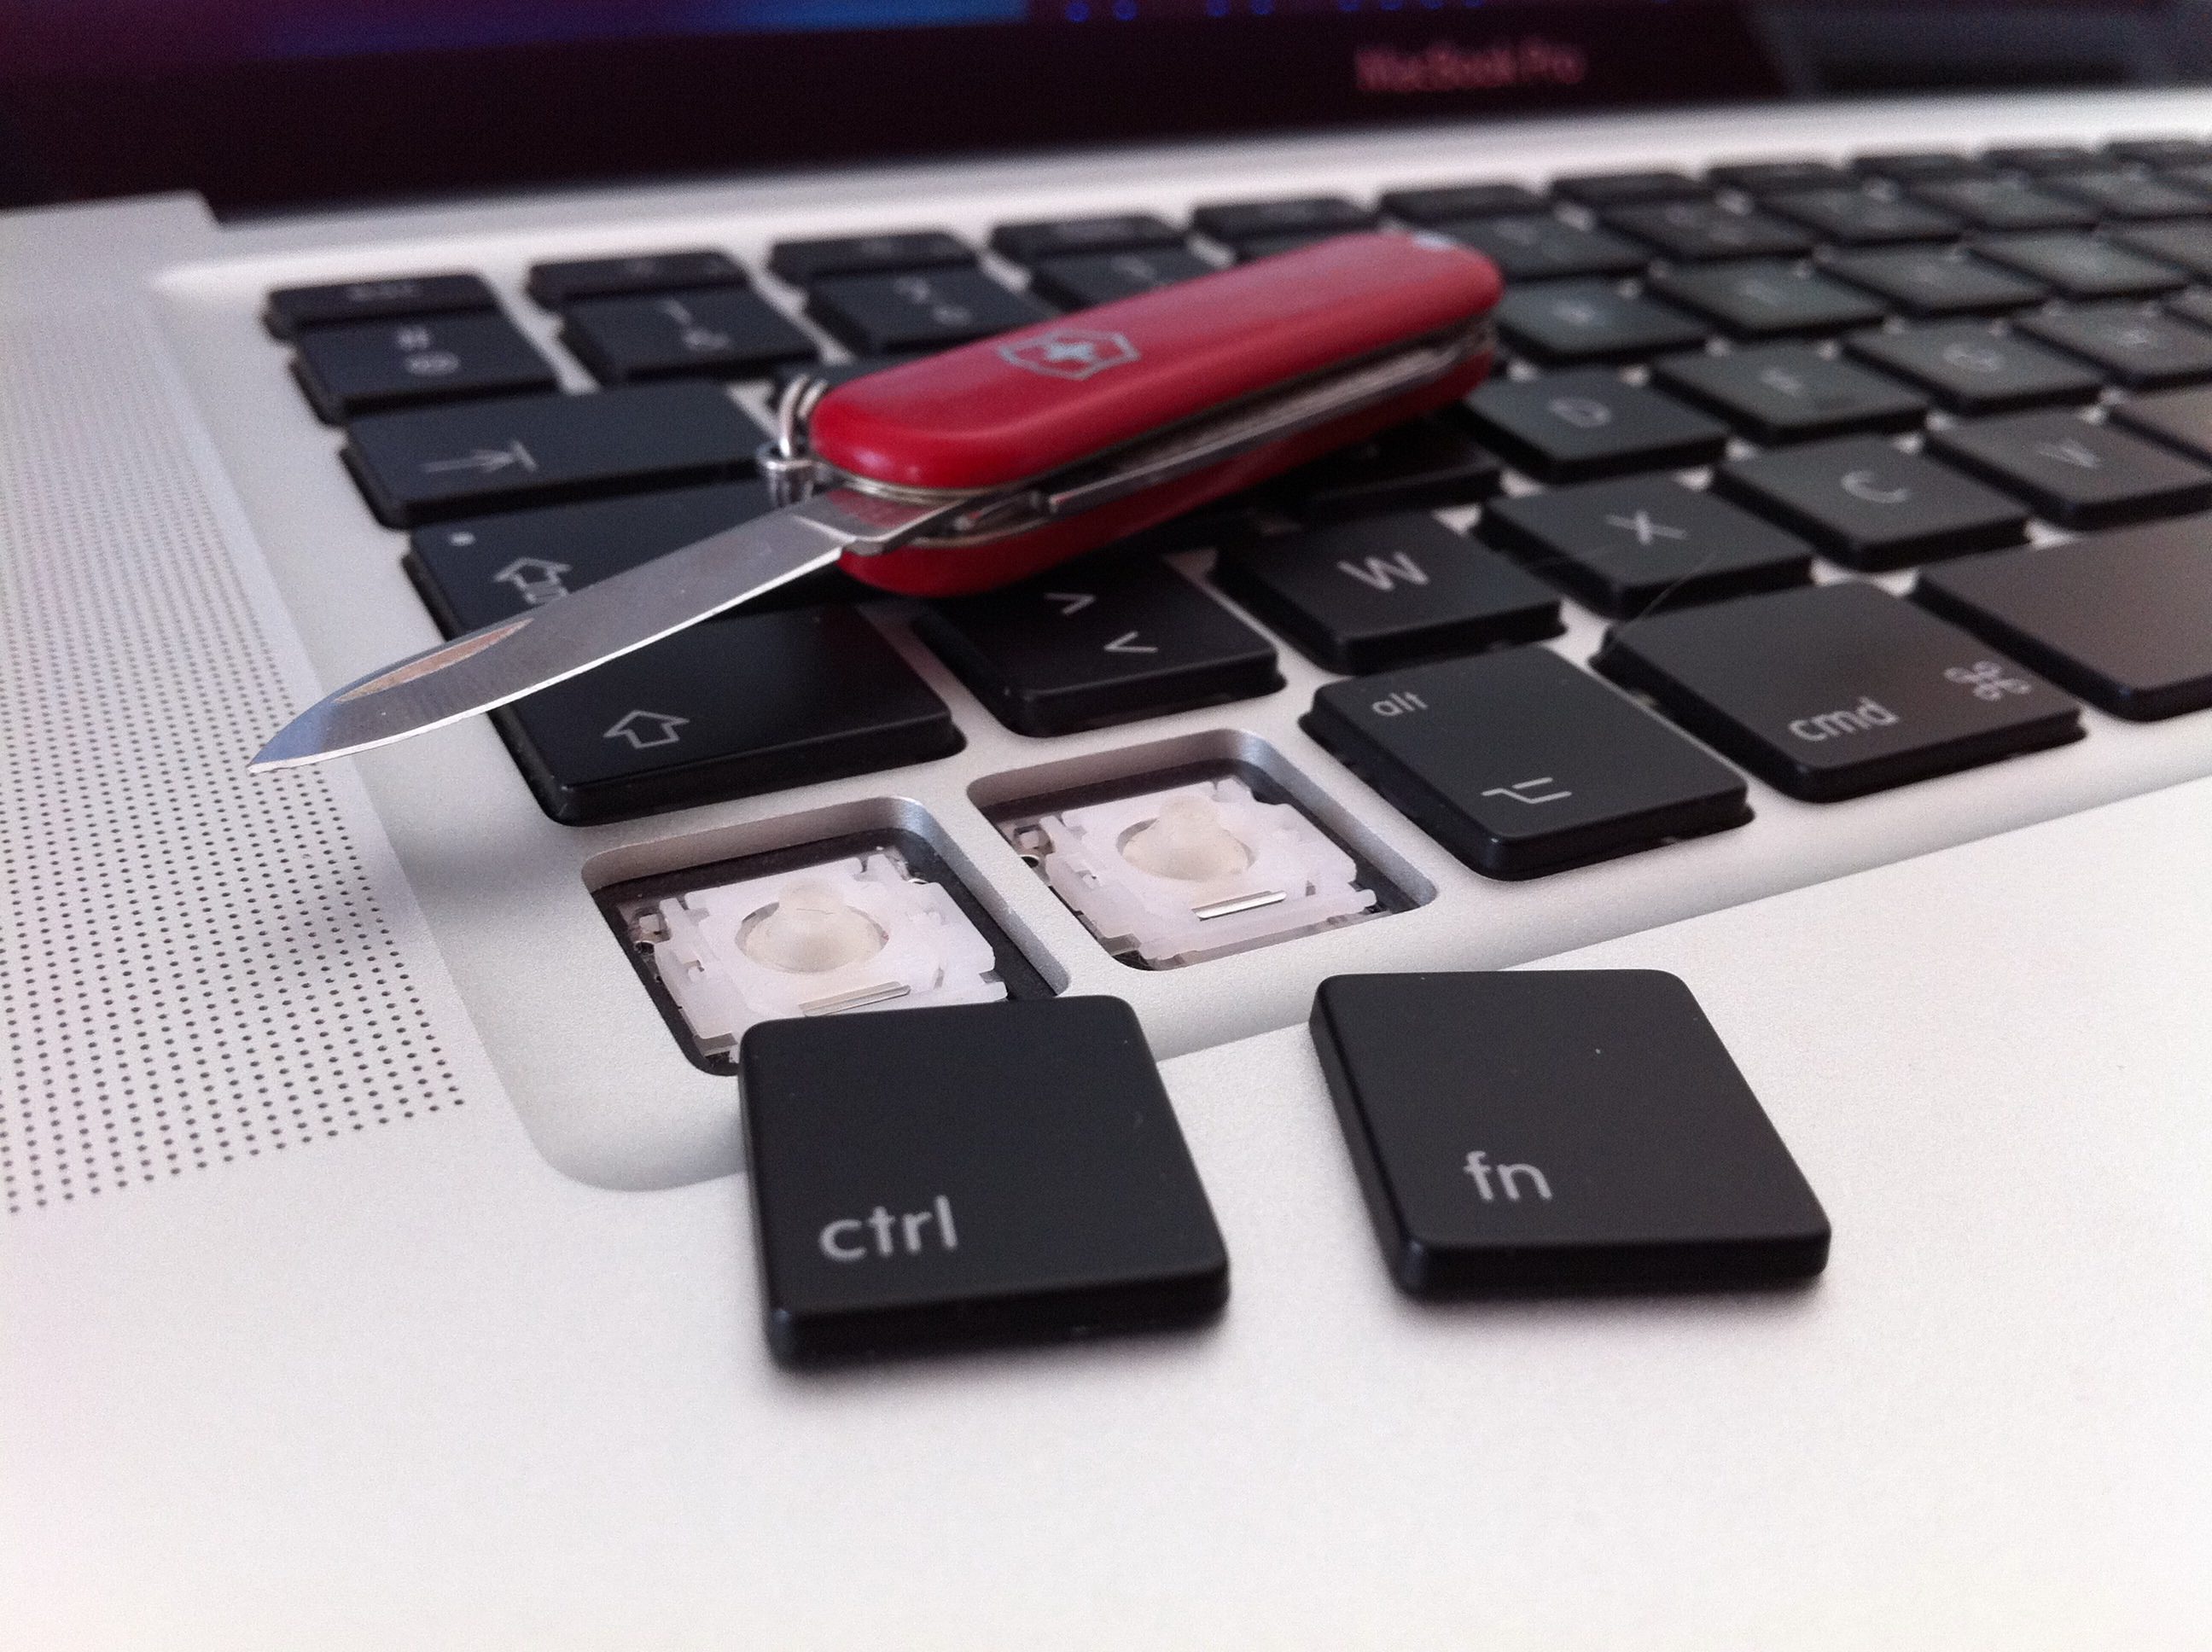 fn keys on mac keyboard